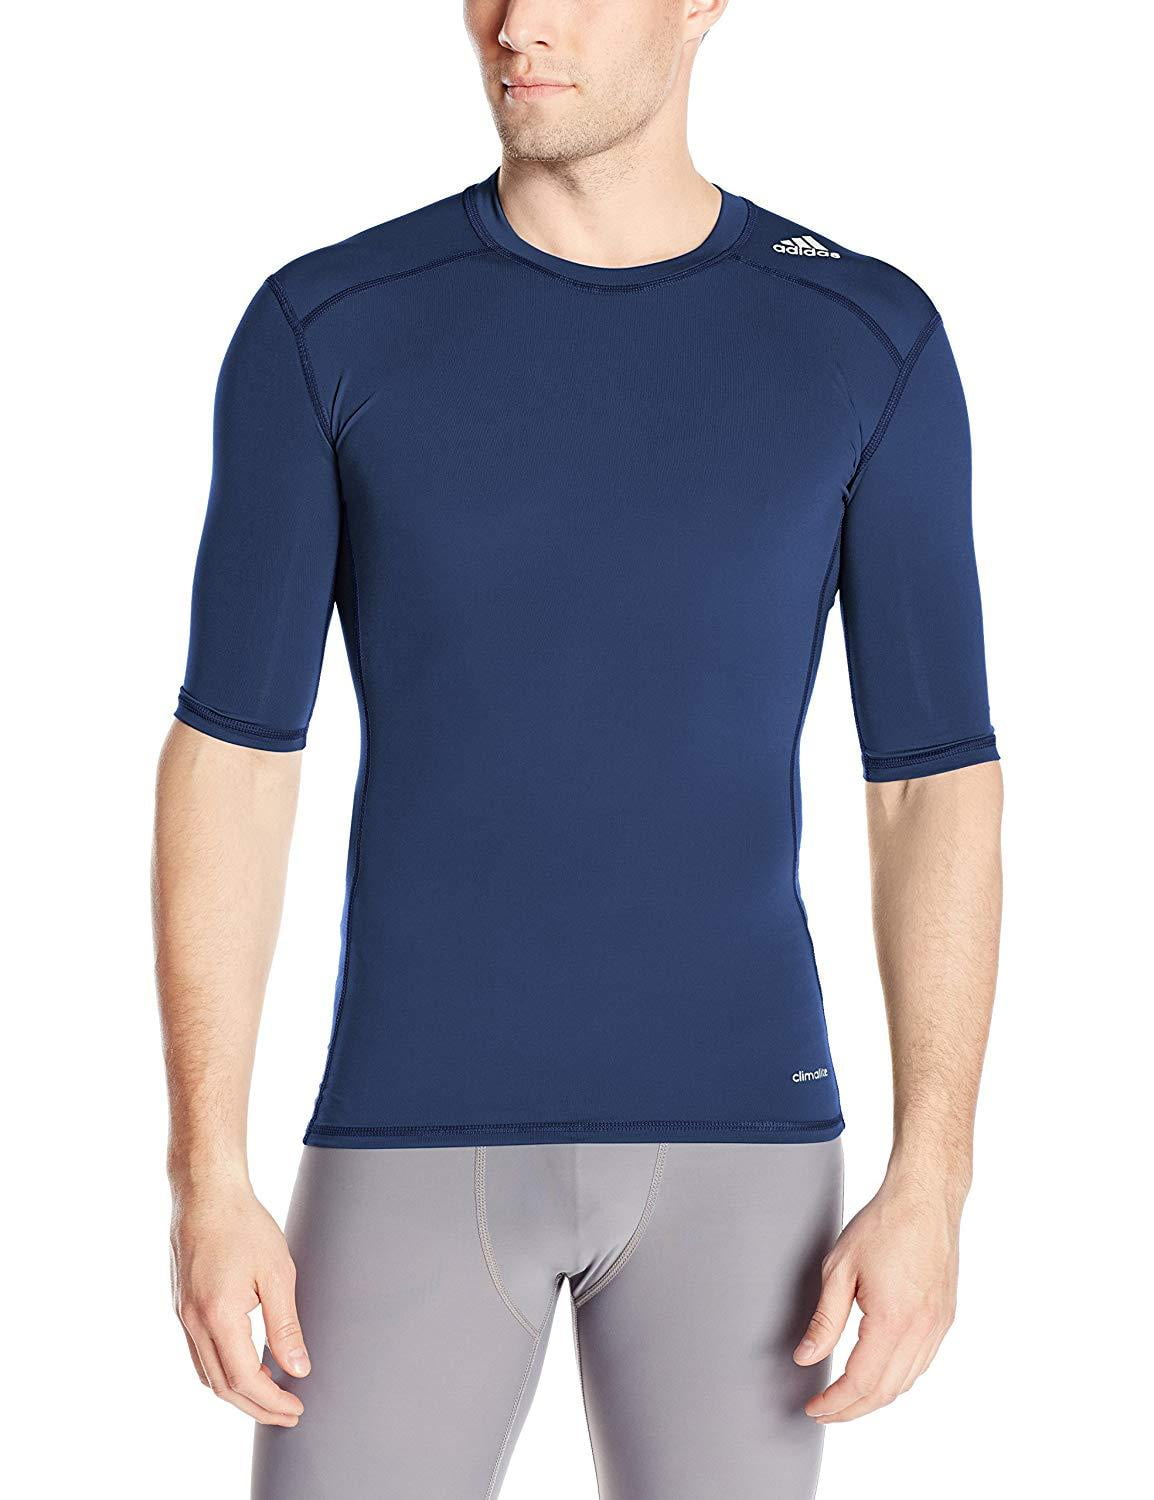 Adidas Men's Training Techfit Base Shirt, Collegiate Navy 